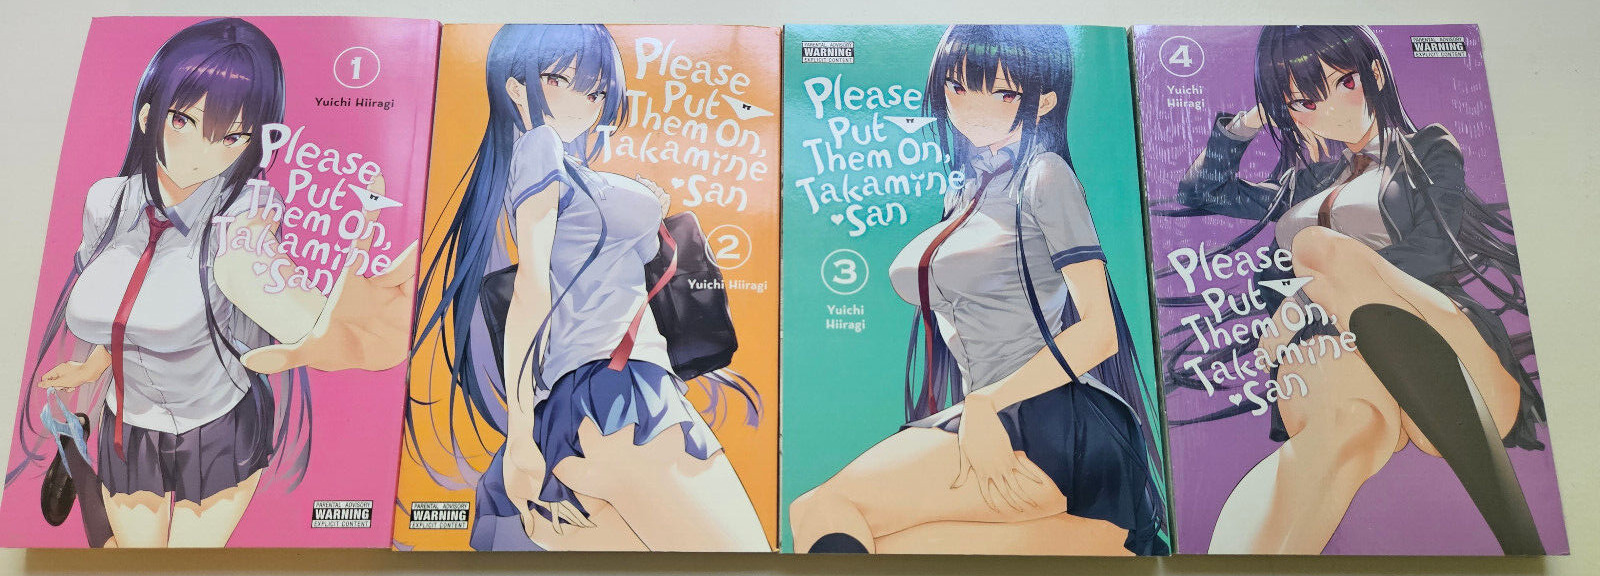 Please Put Them On Takamine-San - Volumes 1 to 4 - English Manga